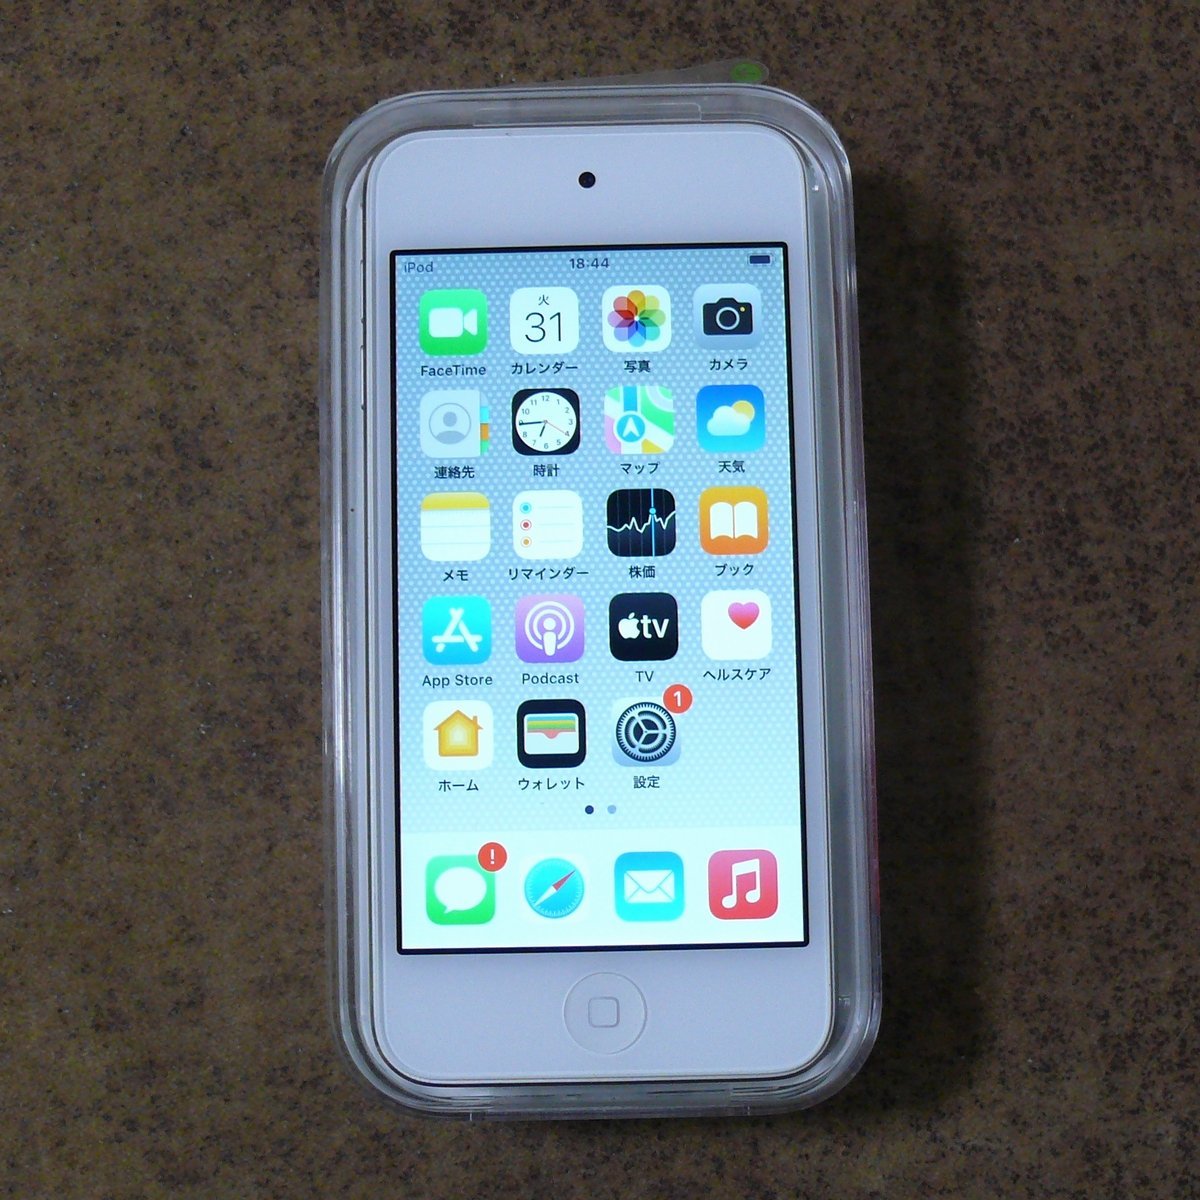 a258d☆Apple iPod touch 32GB シルバー☆wi-fi A2178 MVHV2J/A☆初期化済☆付属品付き_画像1